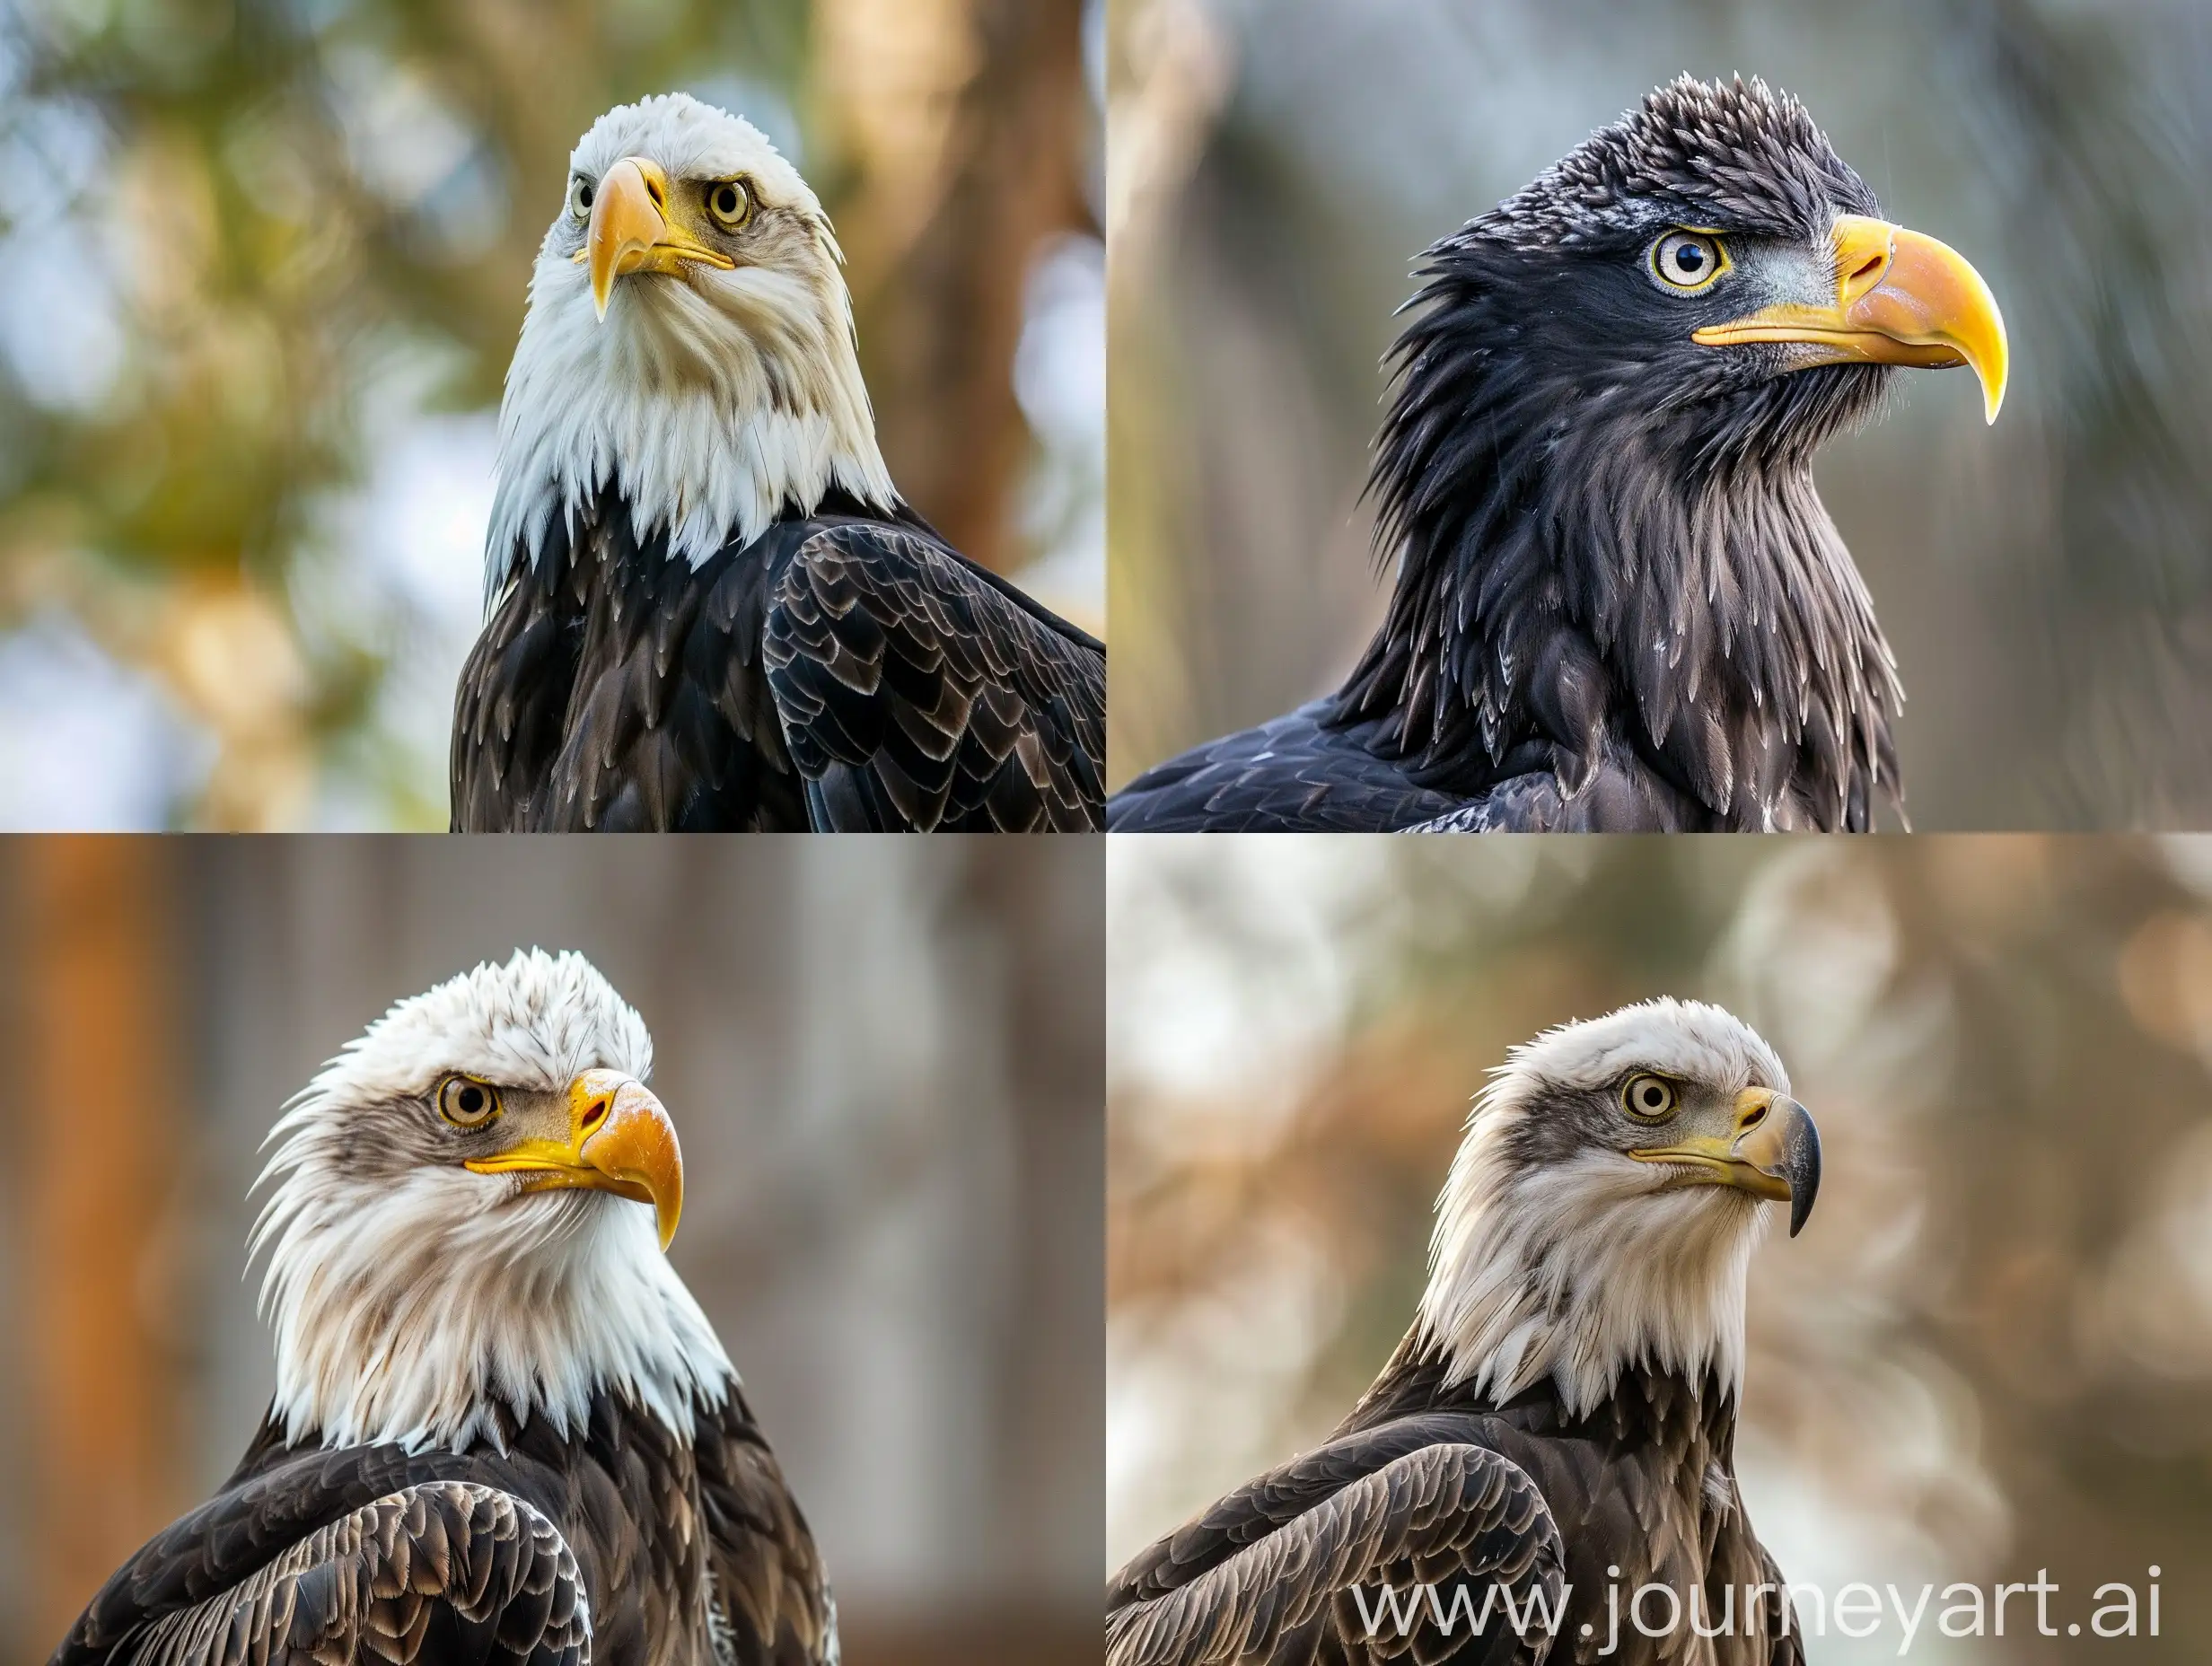 CloseUp-Portrait-of-Majestic-Eagle-in-43-Aspect-Ratio